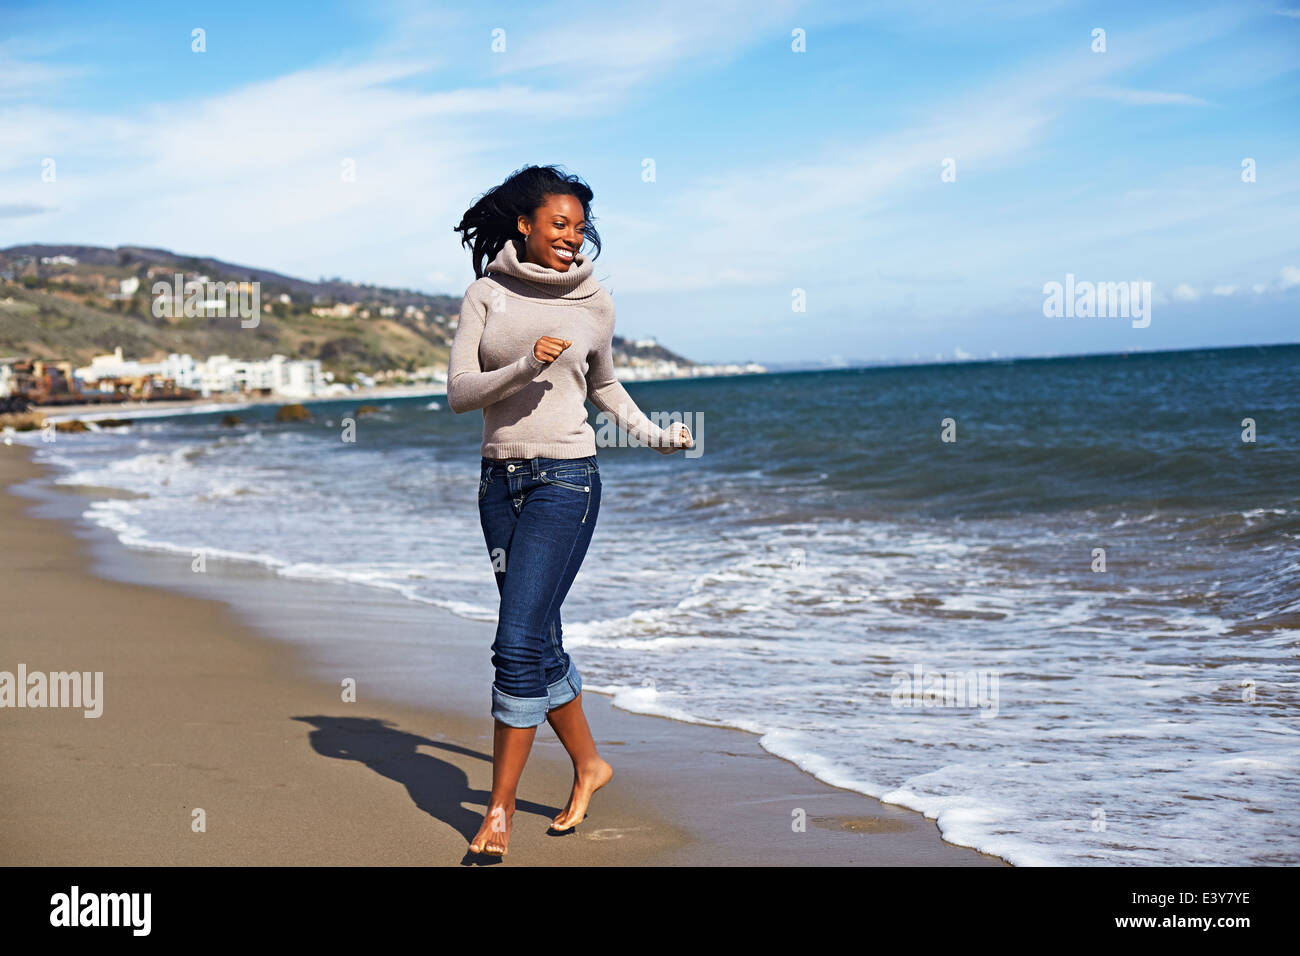 Young woman walking barefoot on beach, Malibu, California, USA Stock Photo